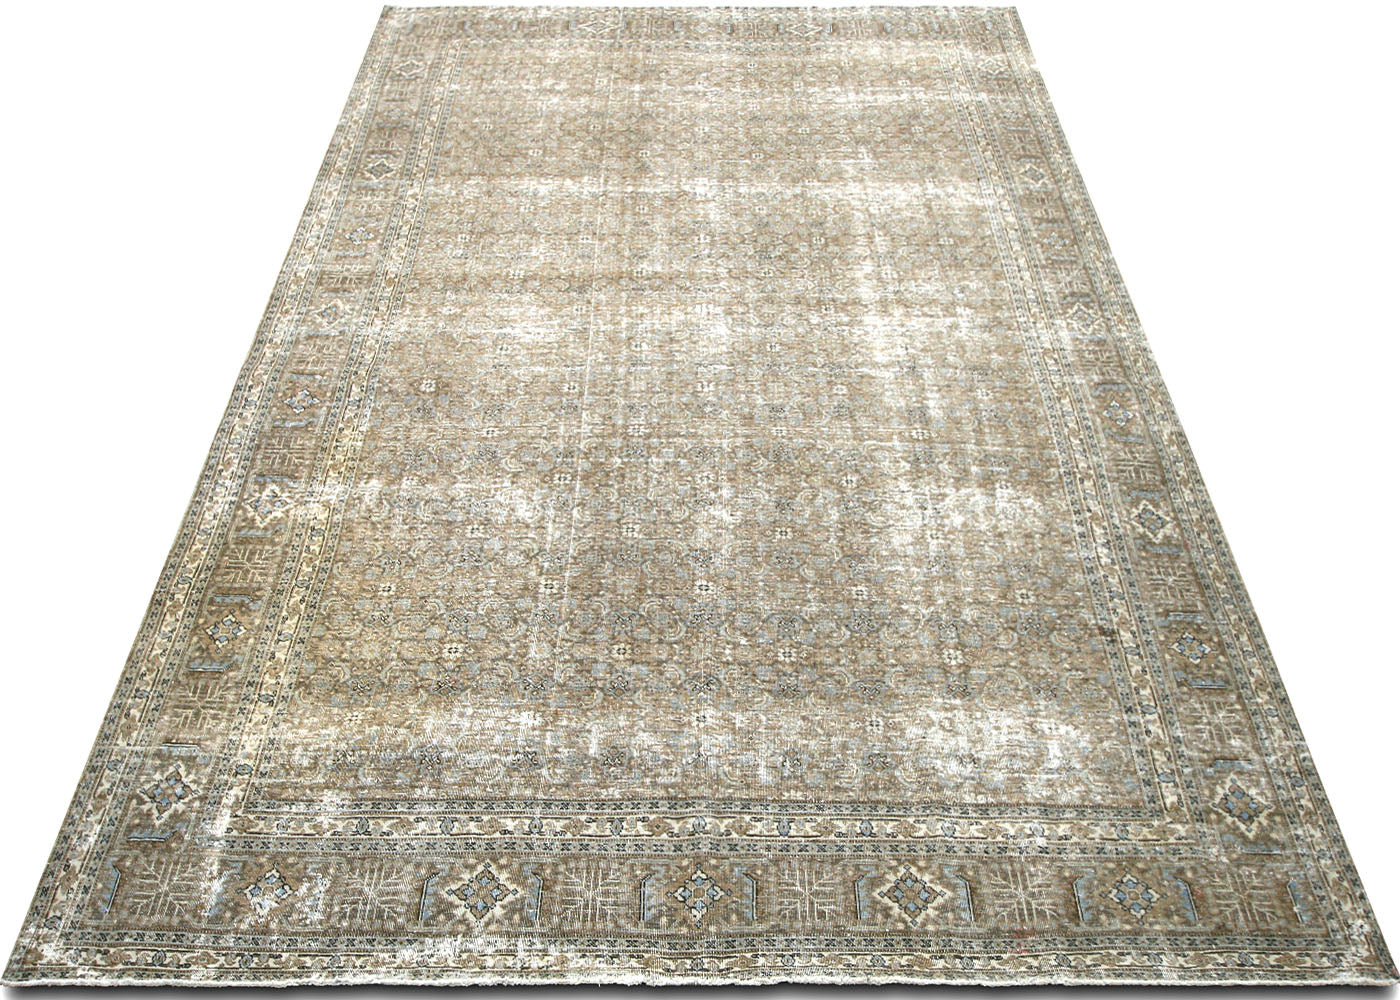 Semi Antique Persian Tabriz Rug - 8'2" x 12'10"